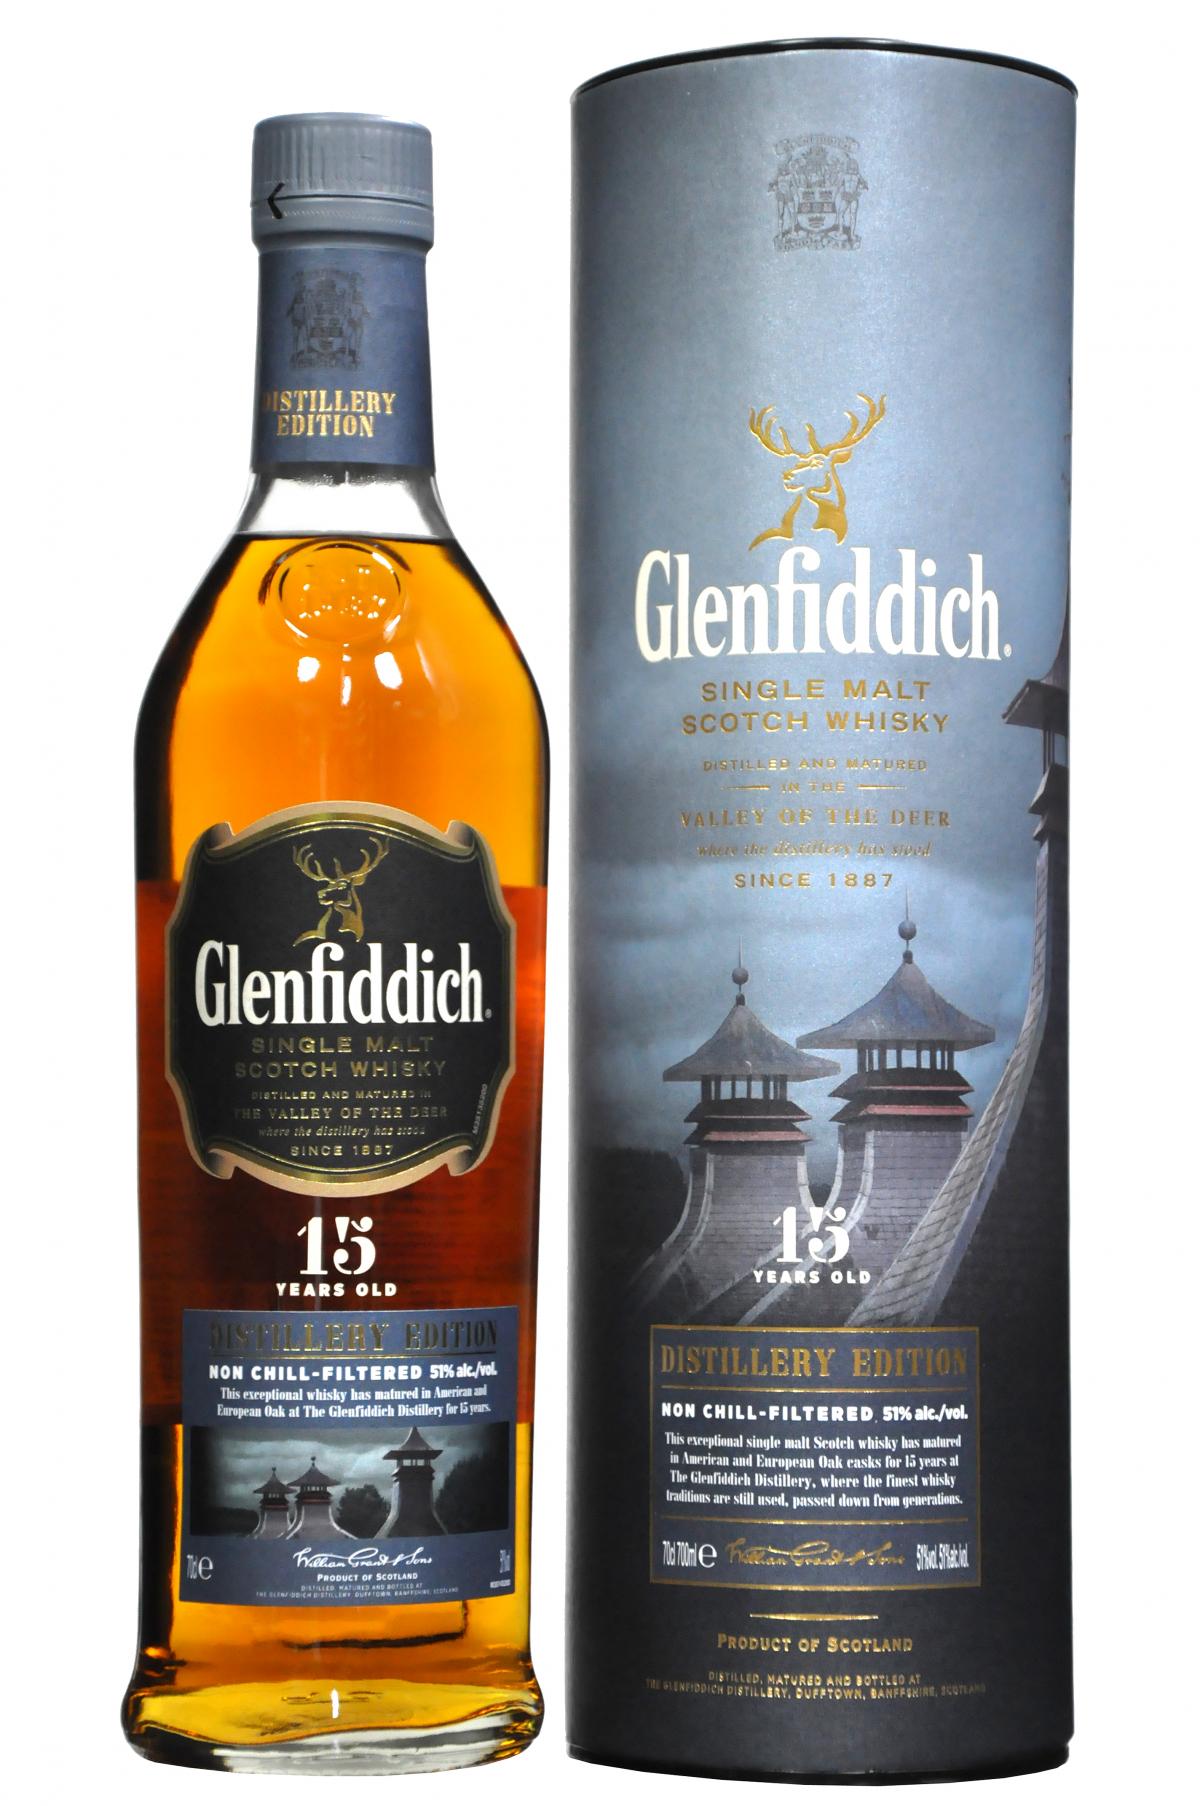 glenfiddich 15 year old, distillery edition, single malt scotch whisky whiskey